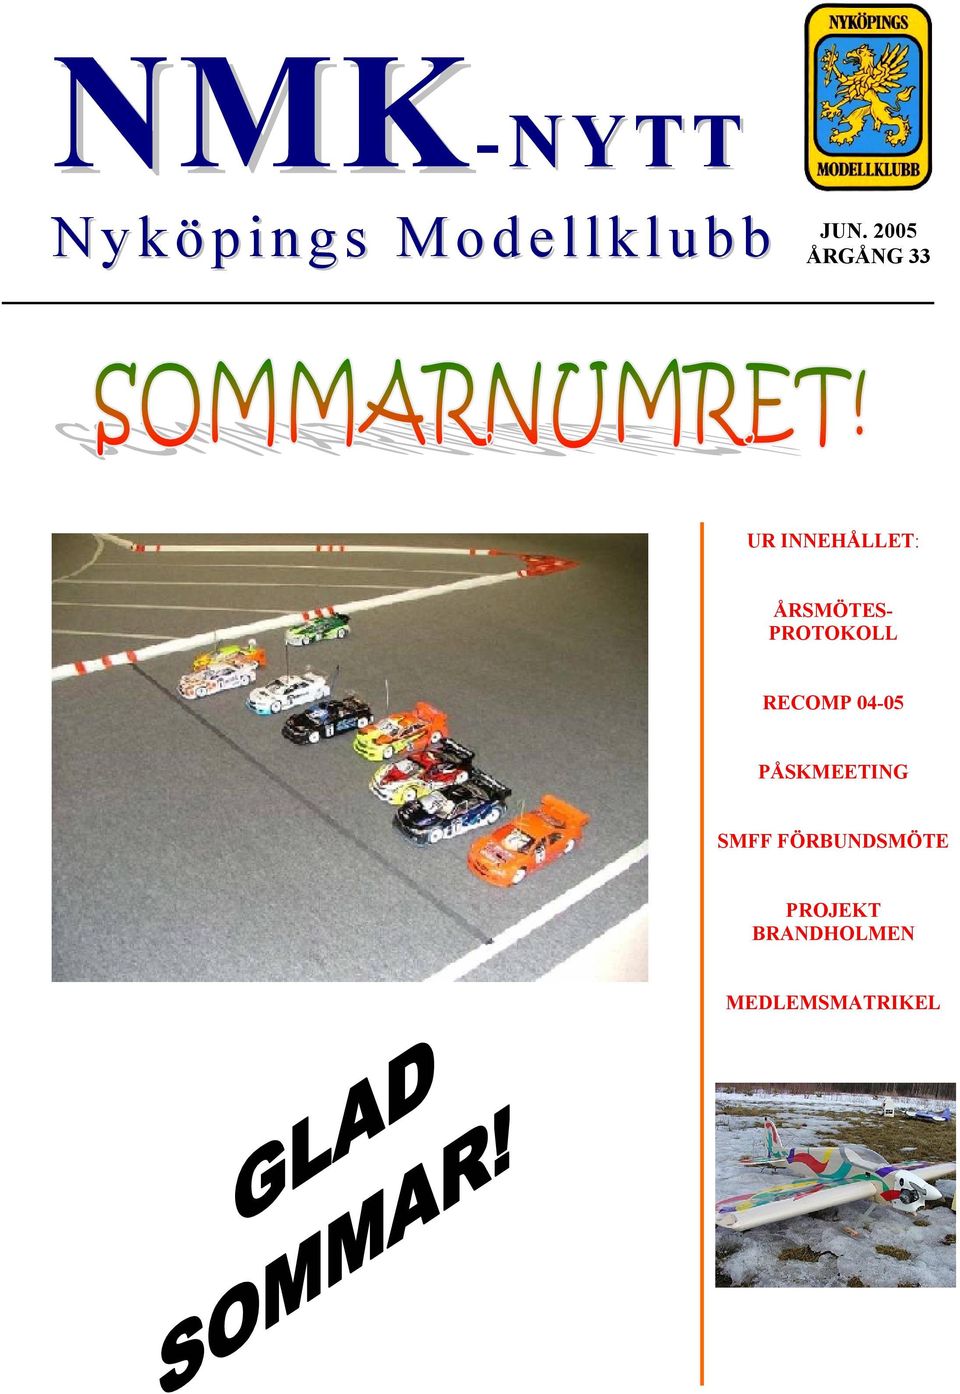 PROTOKOLL RECOMP 04-05 PÅSKMEETING SMFF